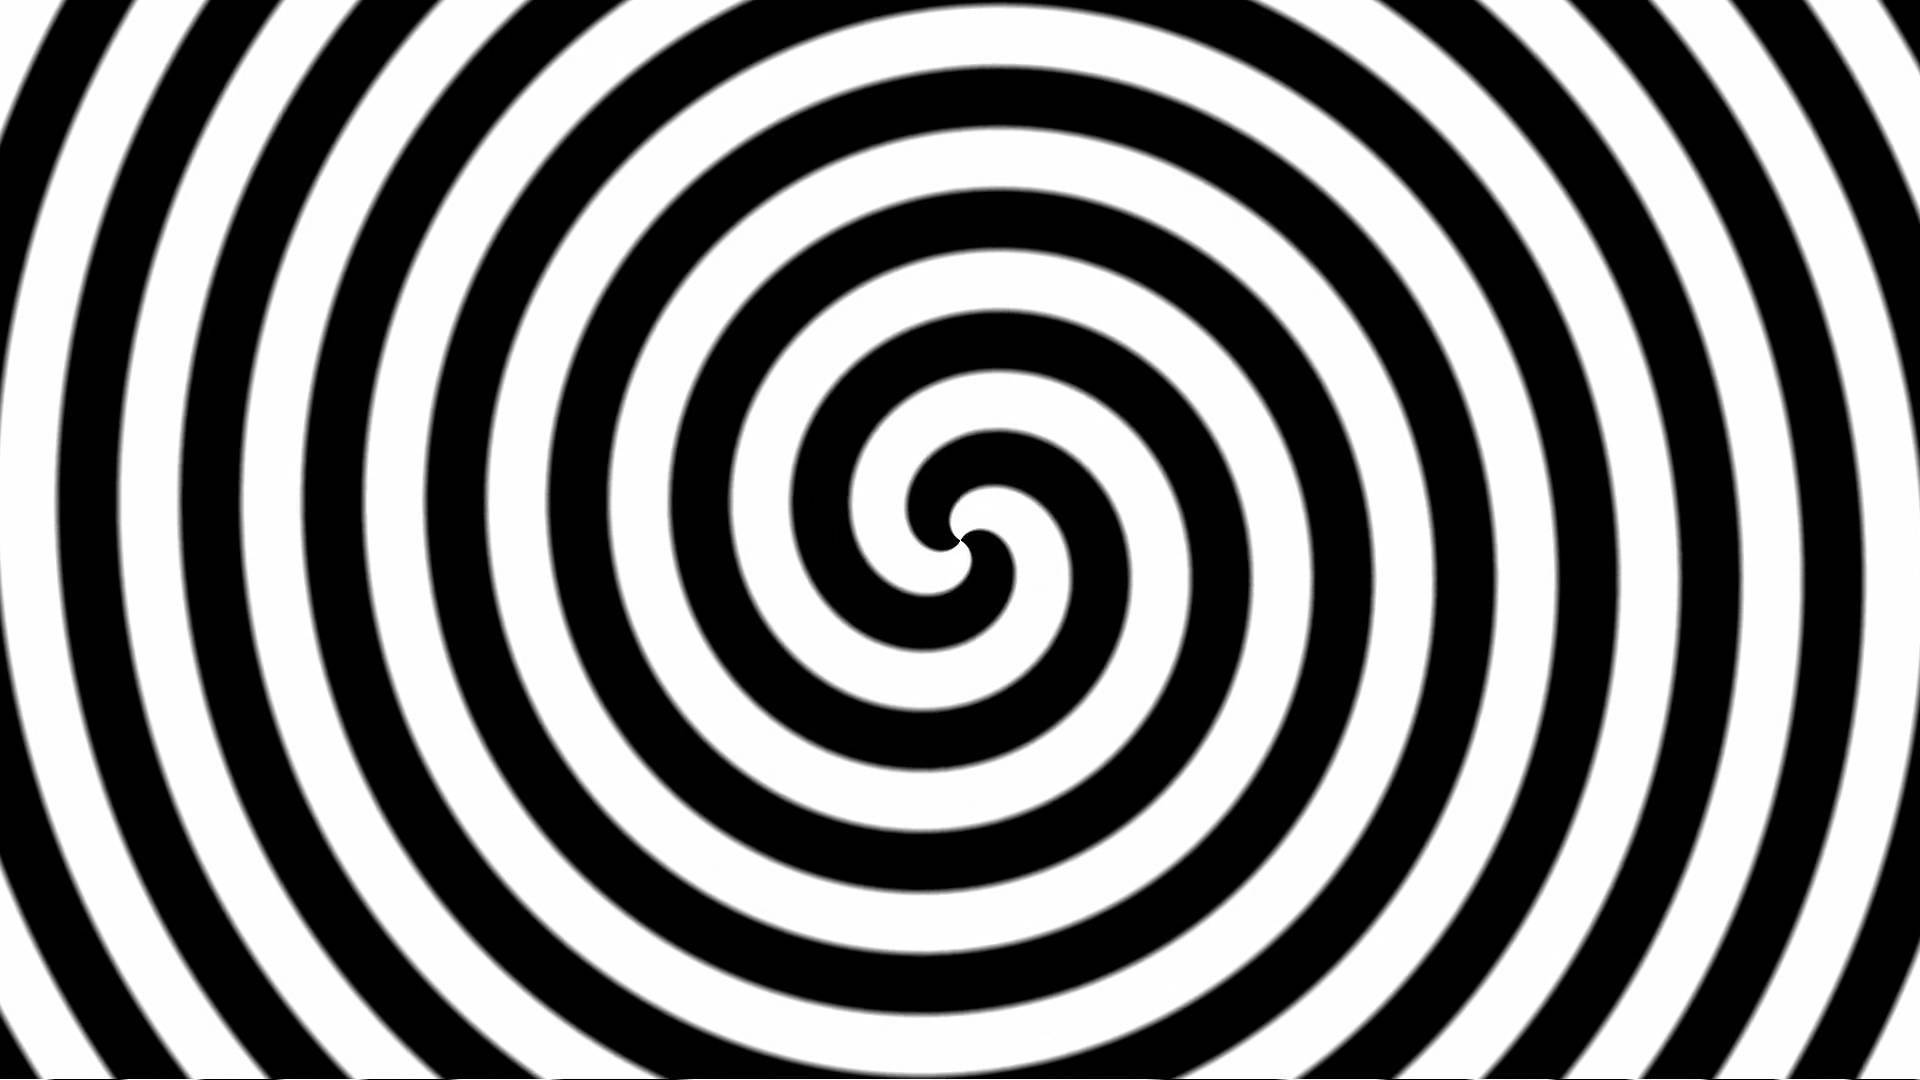 Hypnosis Swirl Pattern